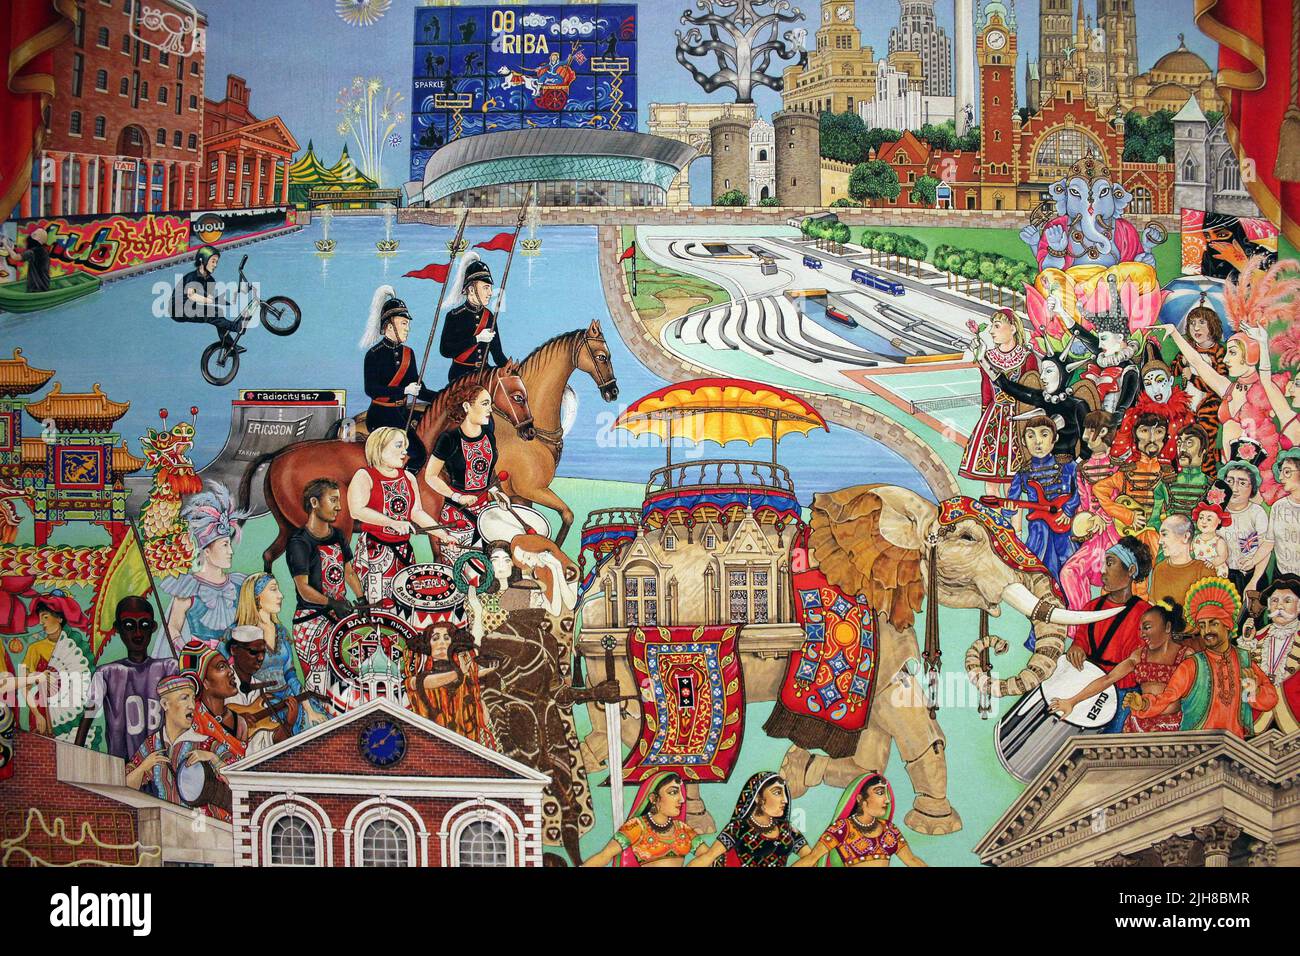 Detail der Singh Sisters „Art Matters: The Pool of Life“ anlässlich des Liverpooler Kulturhauptstadtjahres 2008 Stockfoto